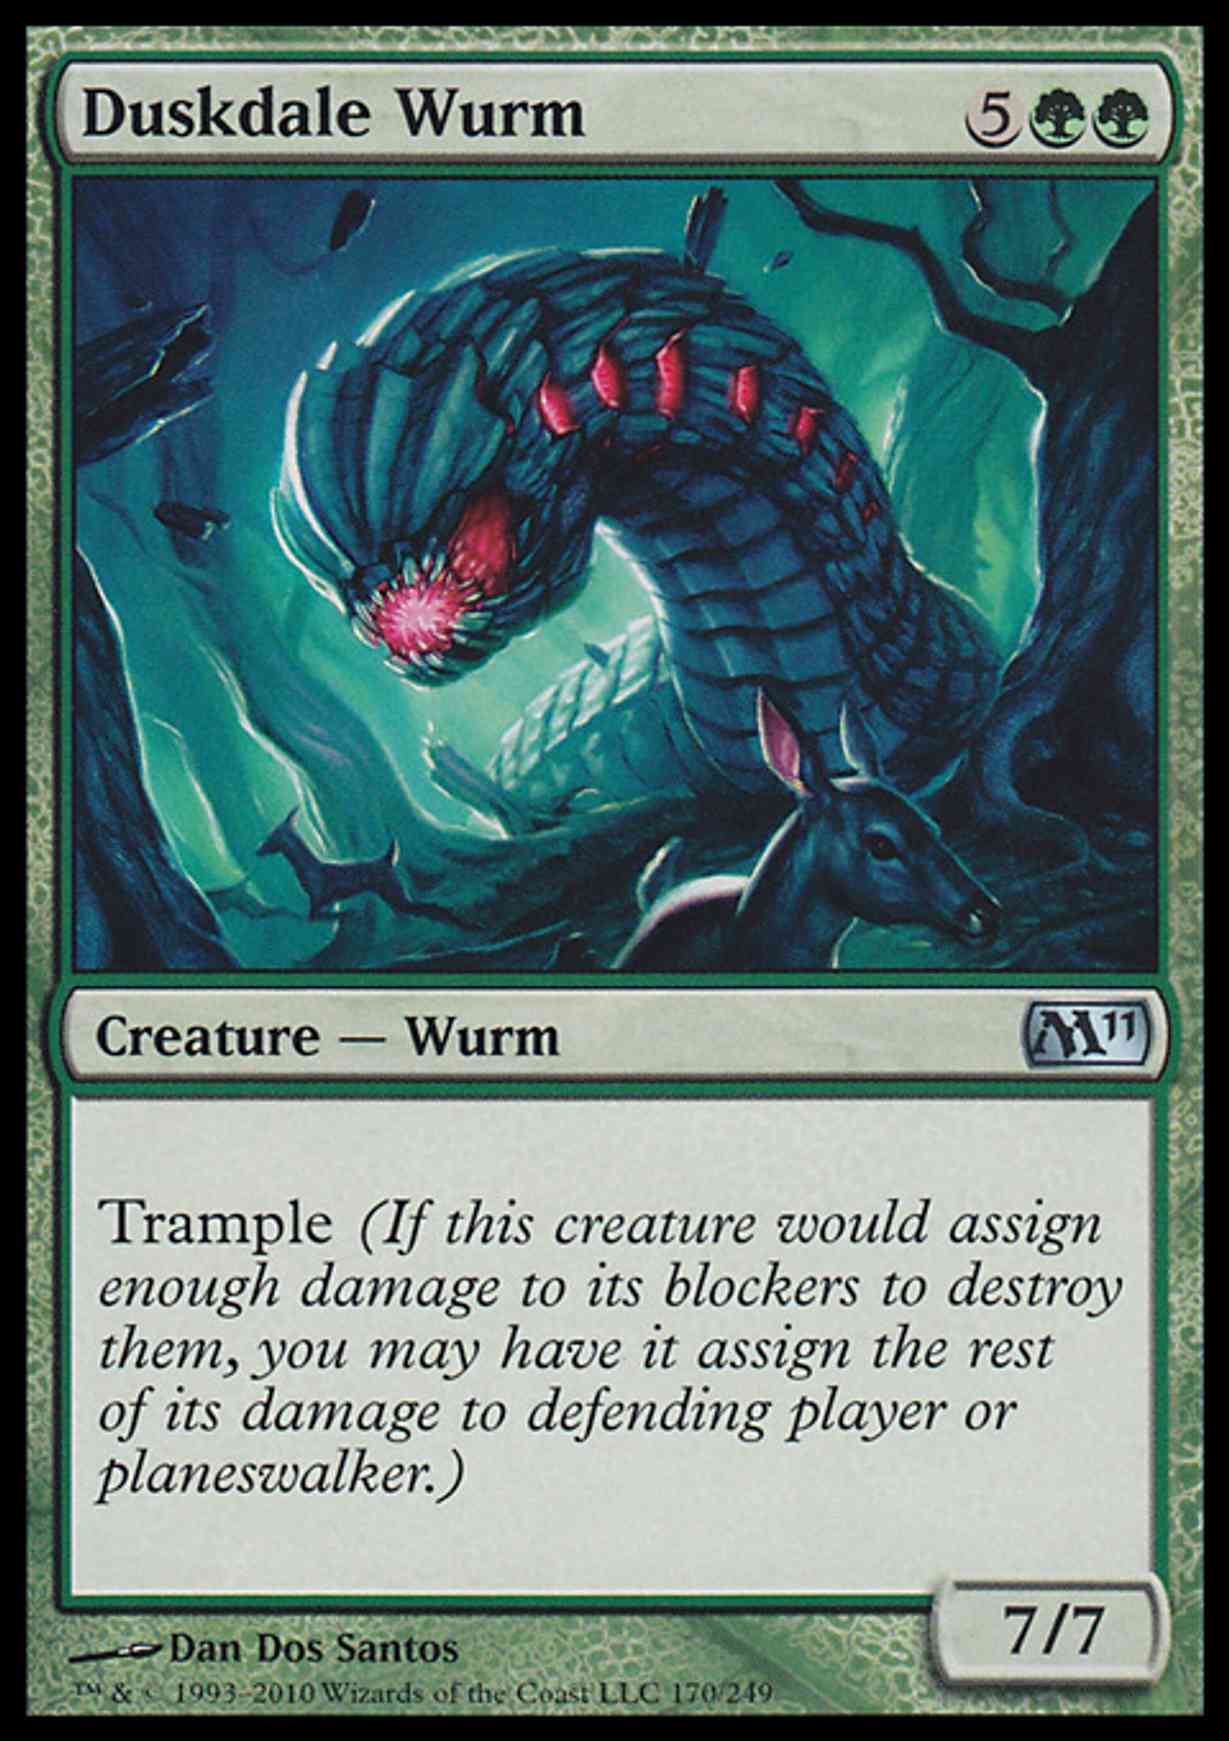 Duskdale Wurm magic card front